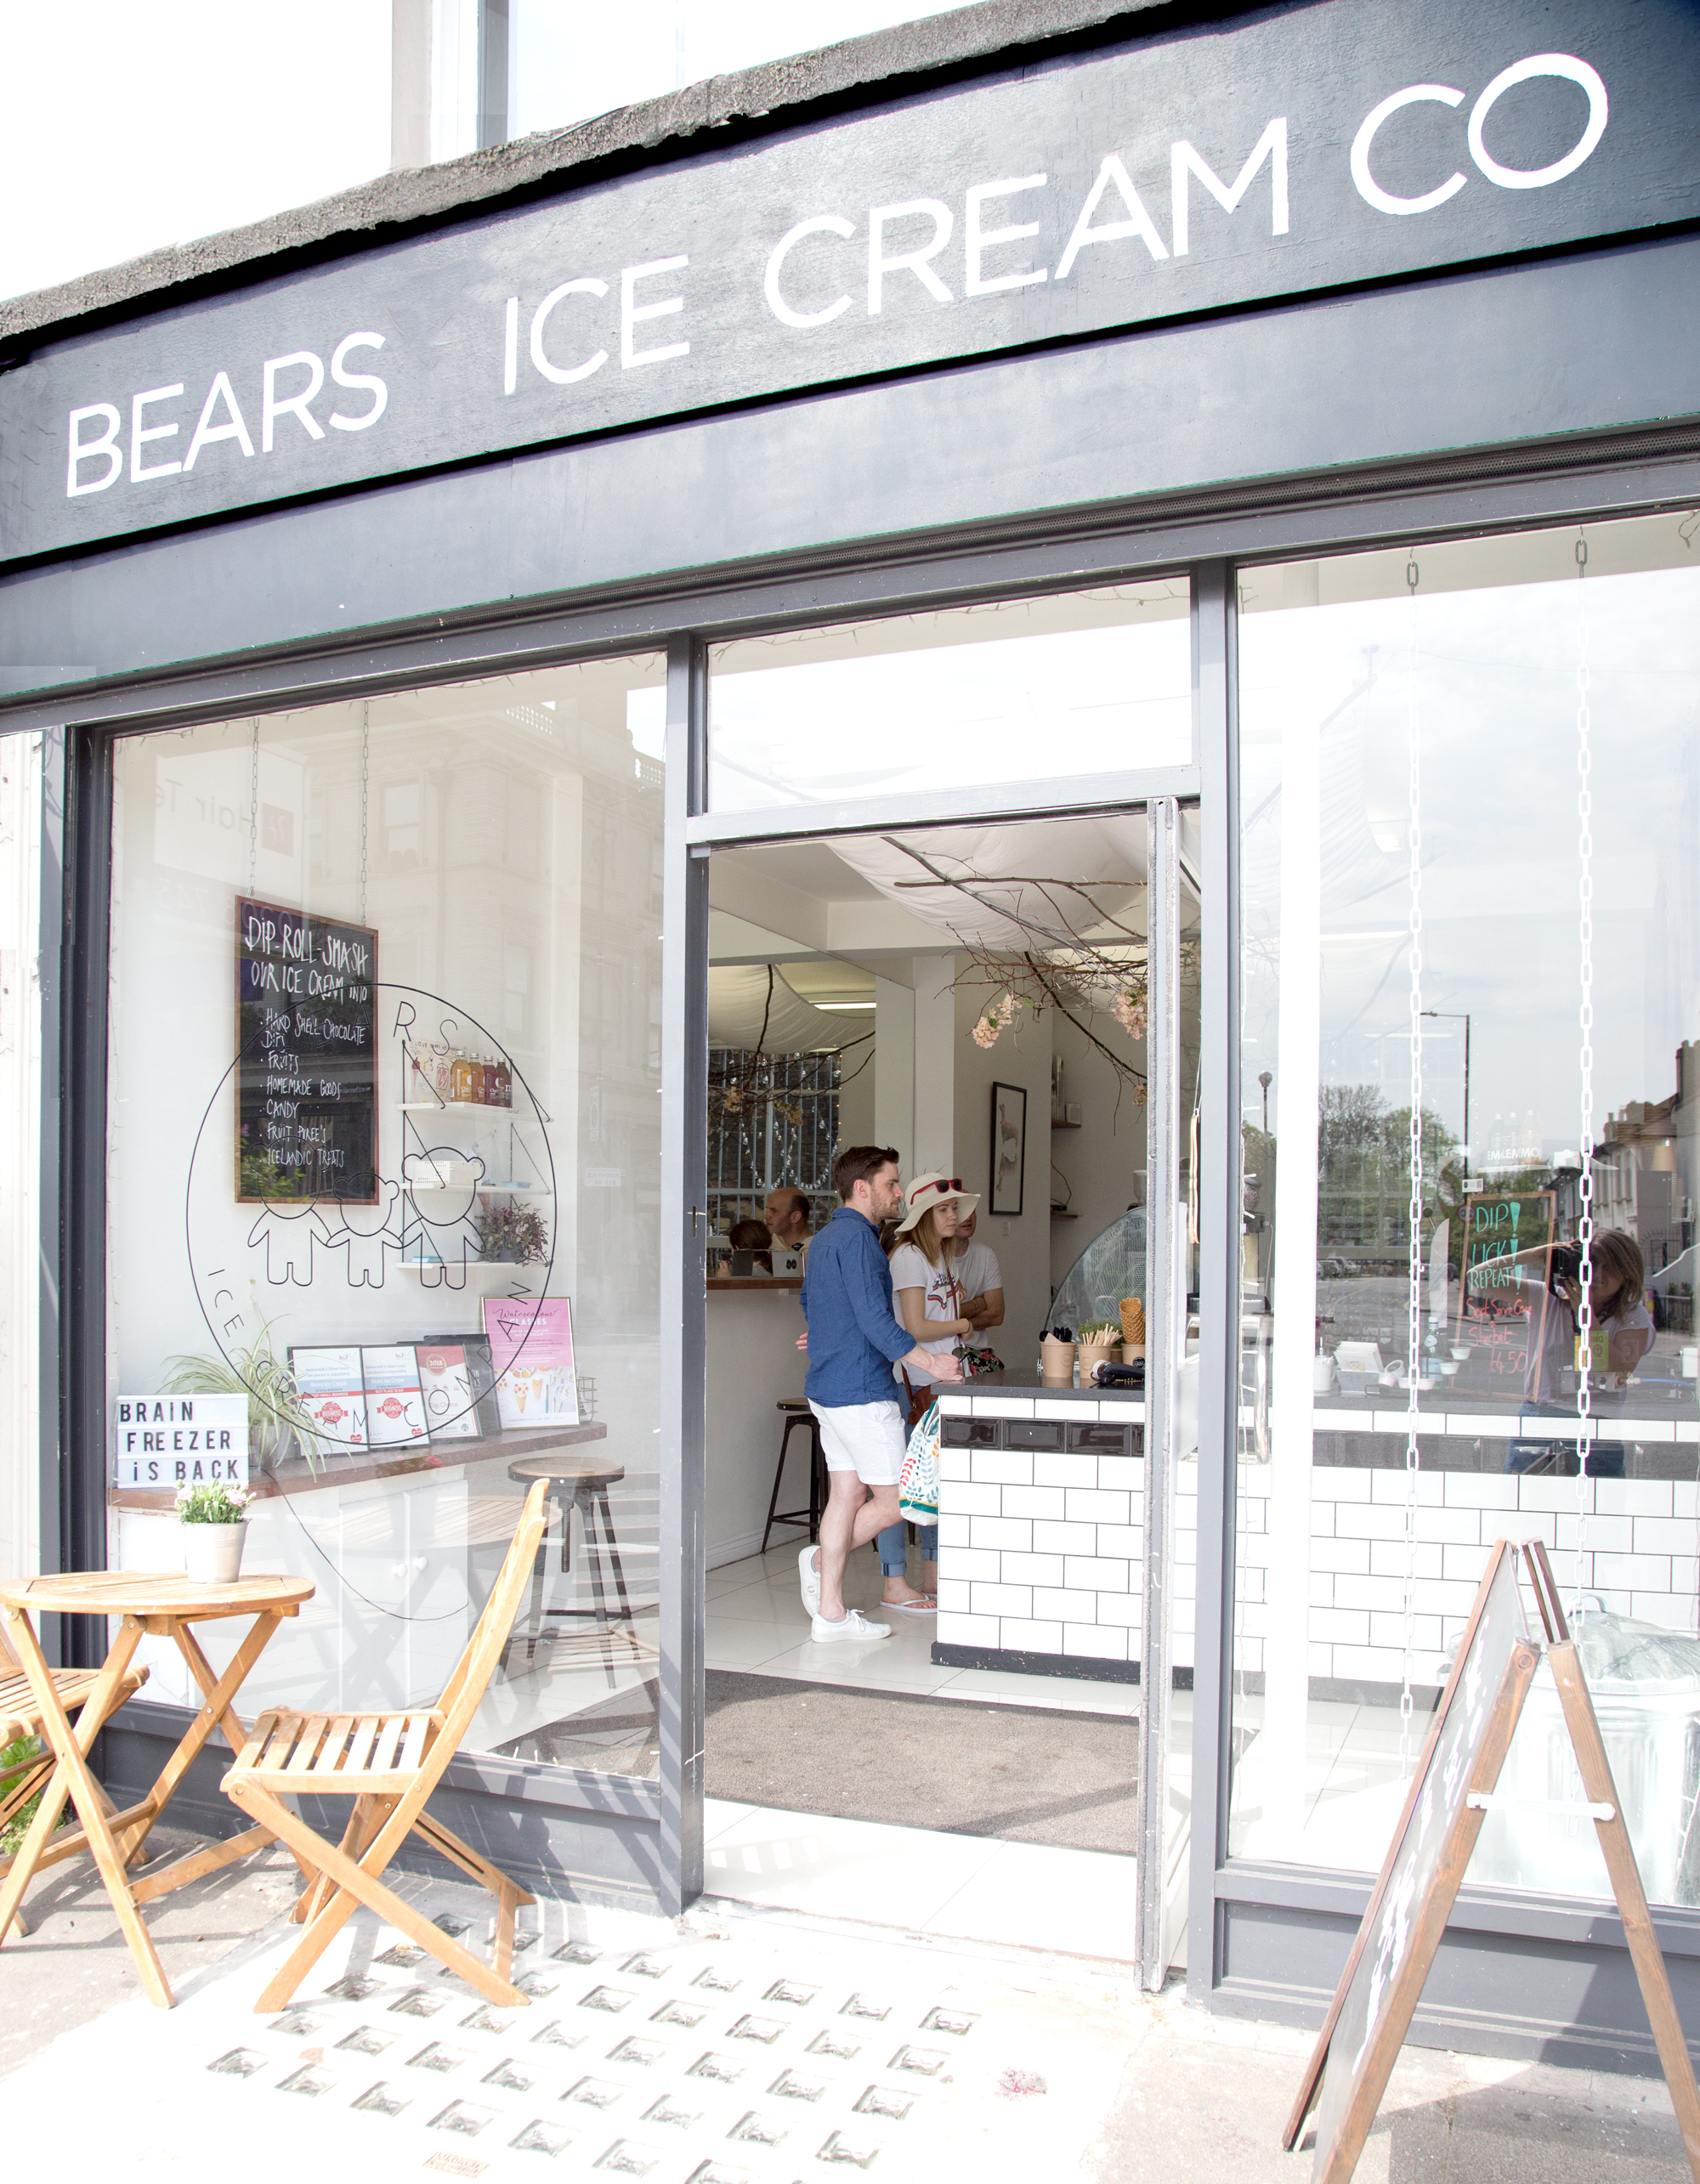 Bears Ice Cream Co, West London